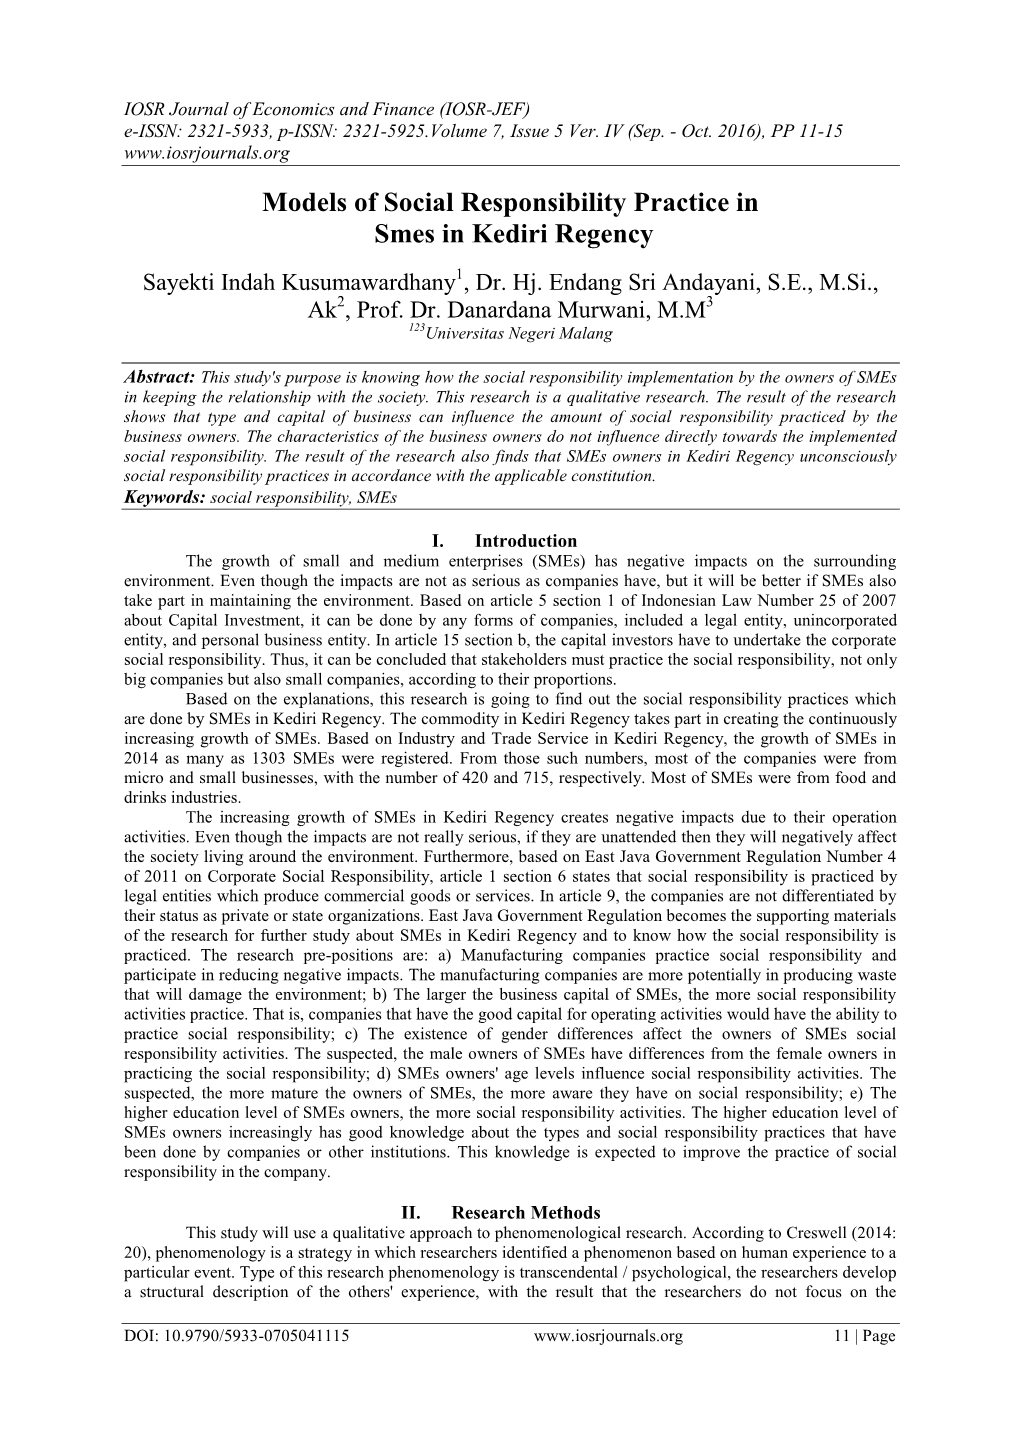 Models of Social Responsibility Practice in Smes in Kediri Regency